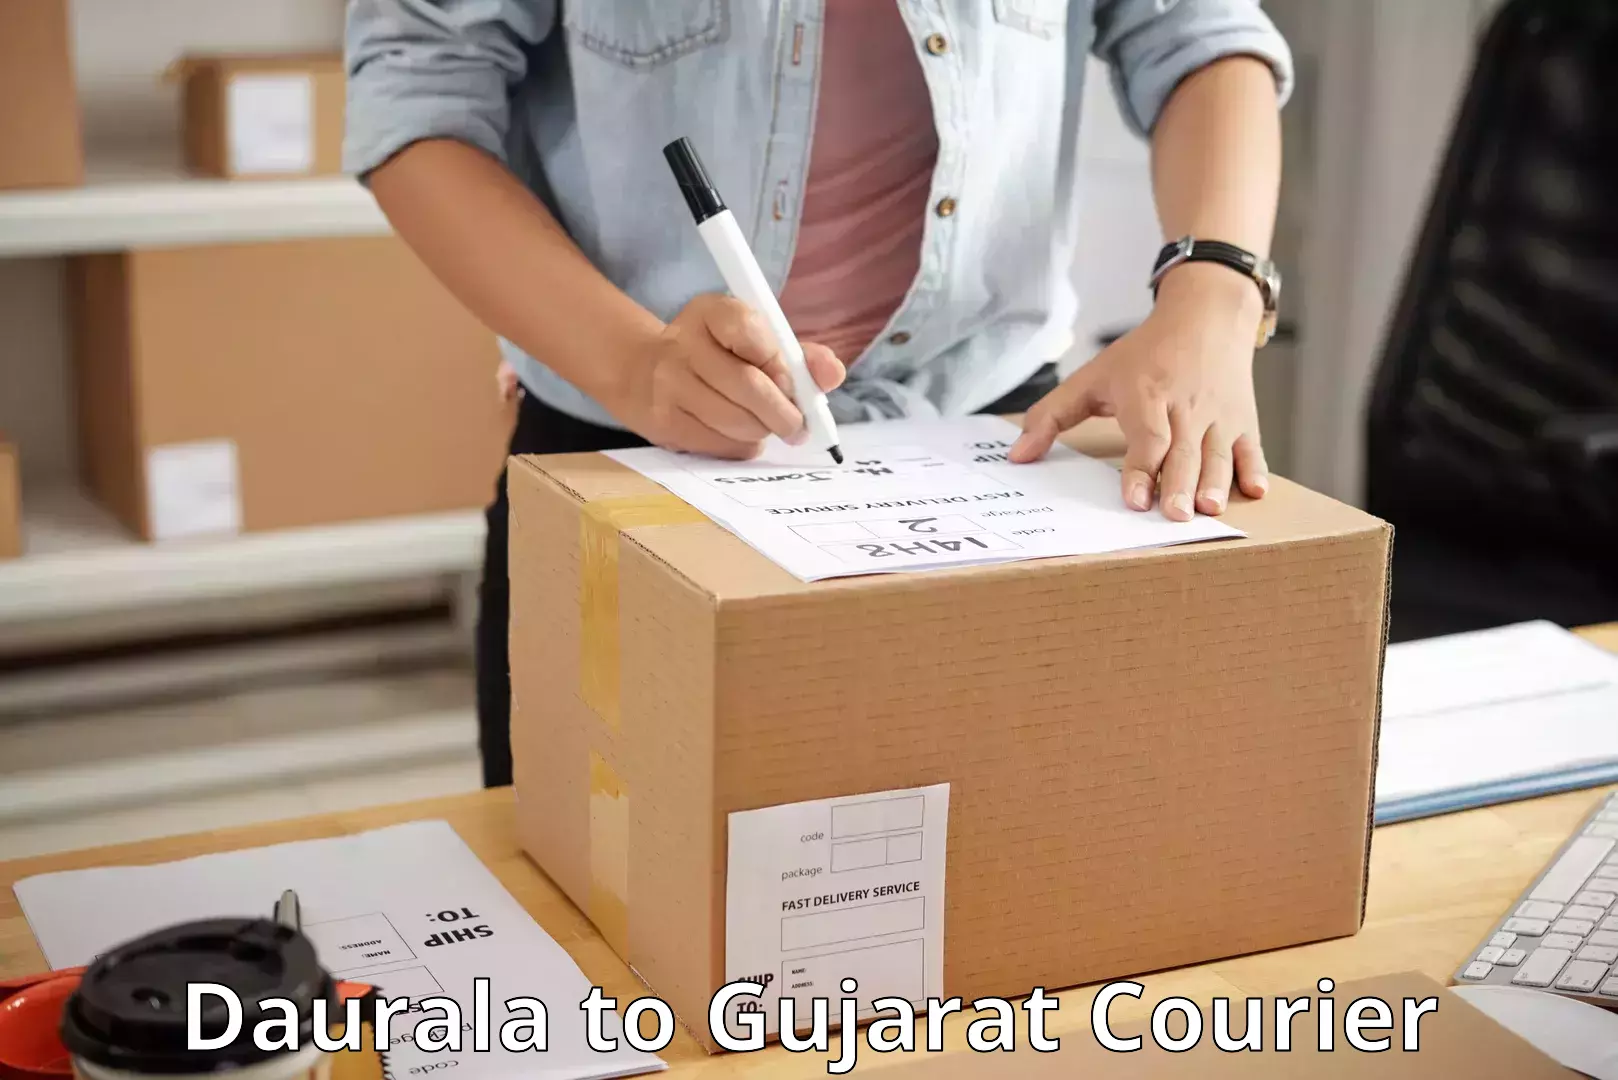 International parcel service Daurala to Gujarat